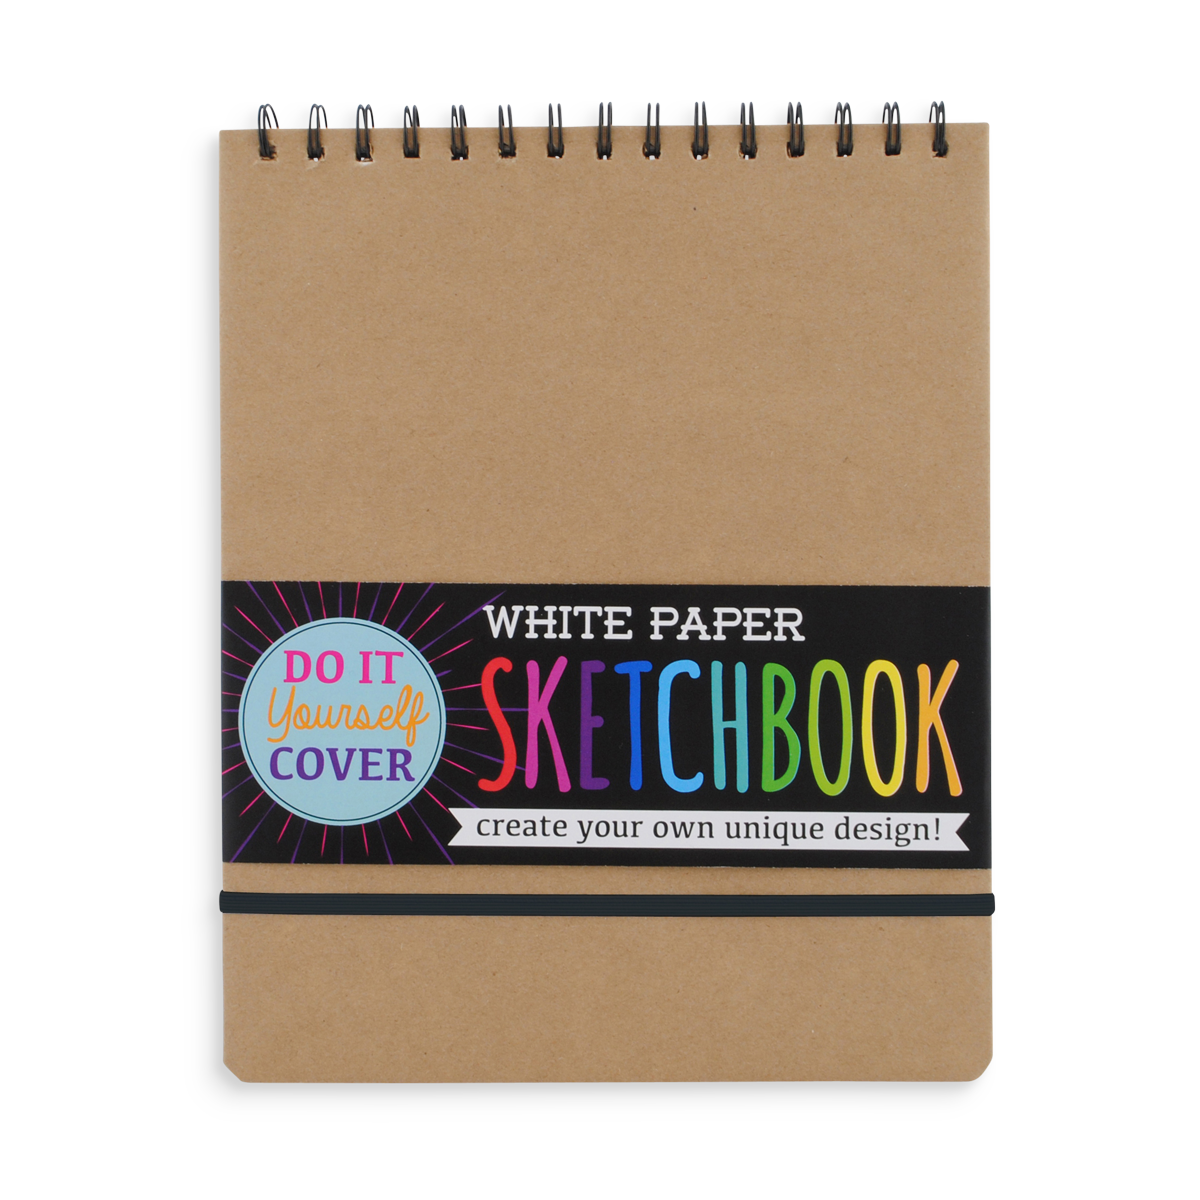 SKETCHBOOK WHITE DIY COVER 5X7